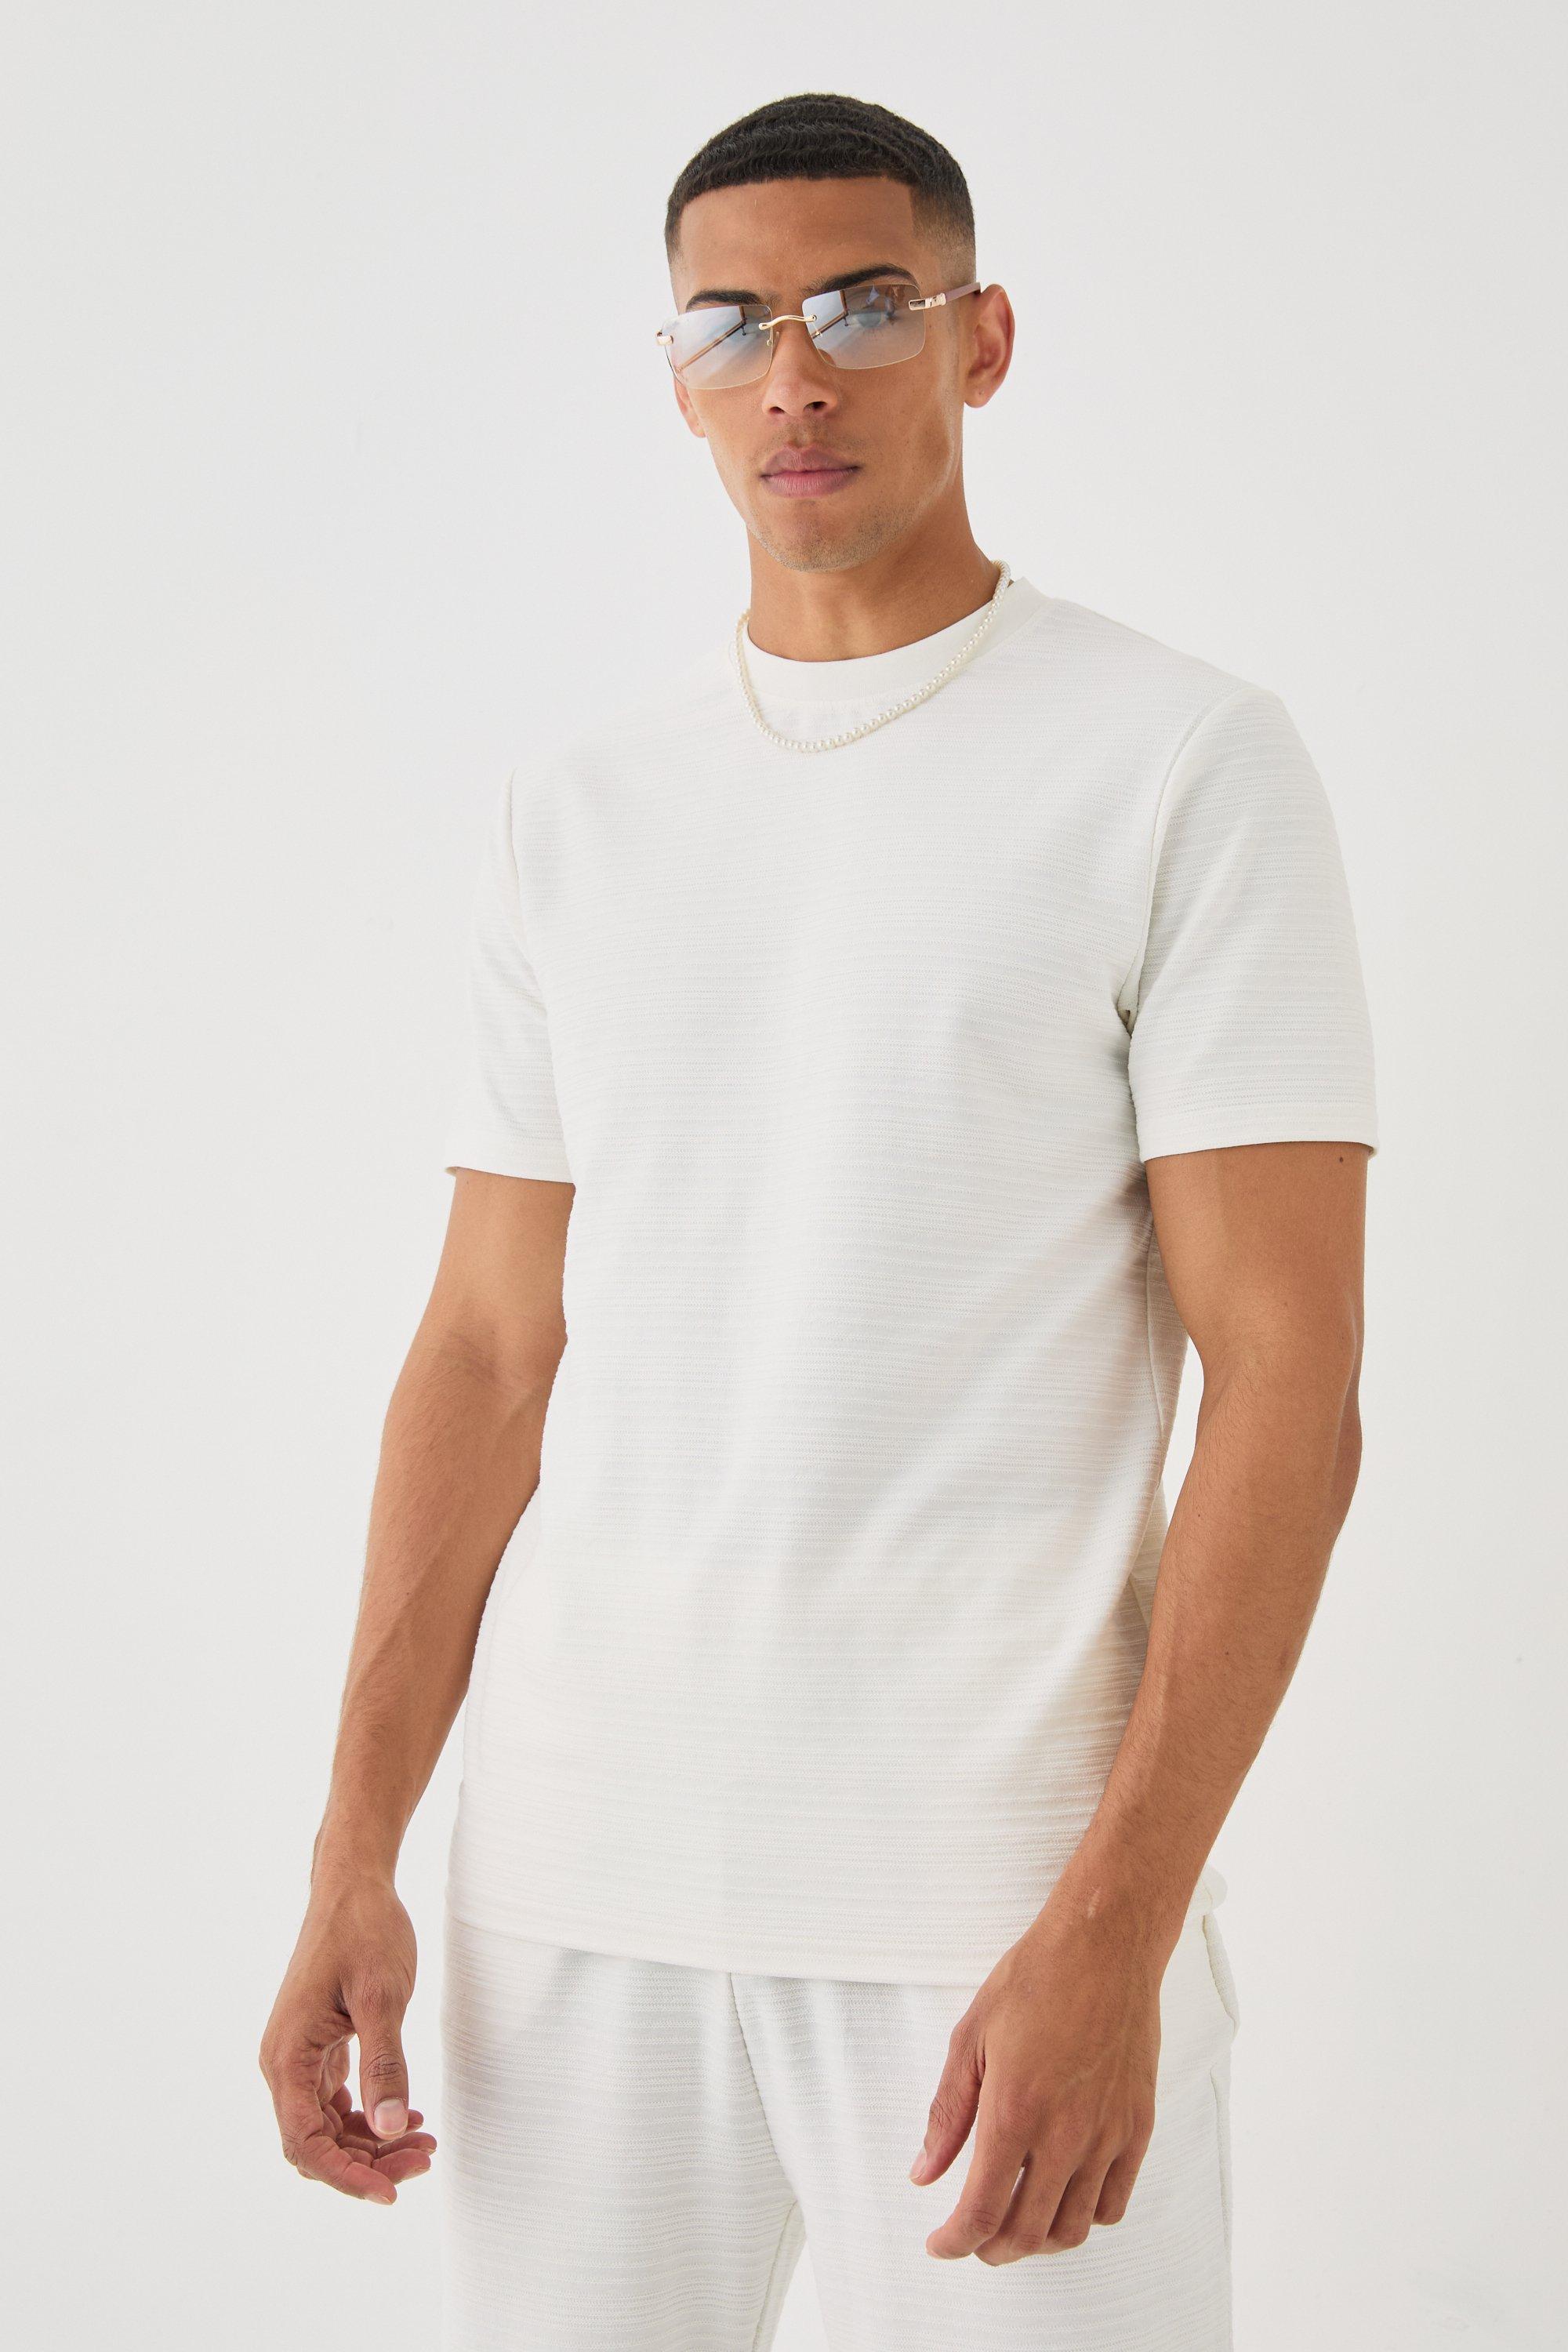 Image of Slim Jacquard Raised Striped T-shirt, Cream